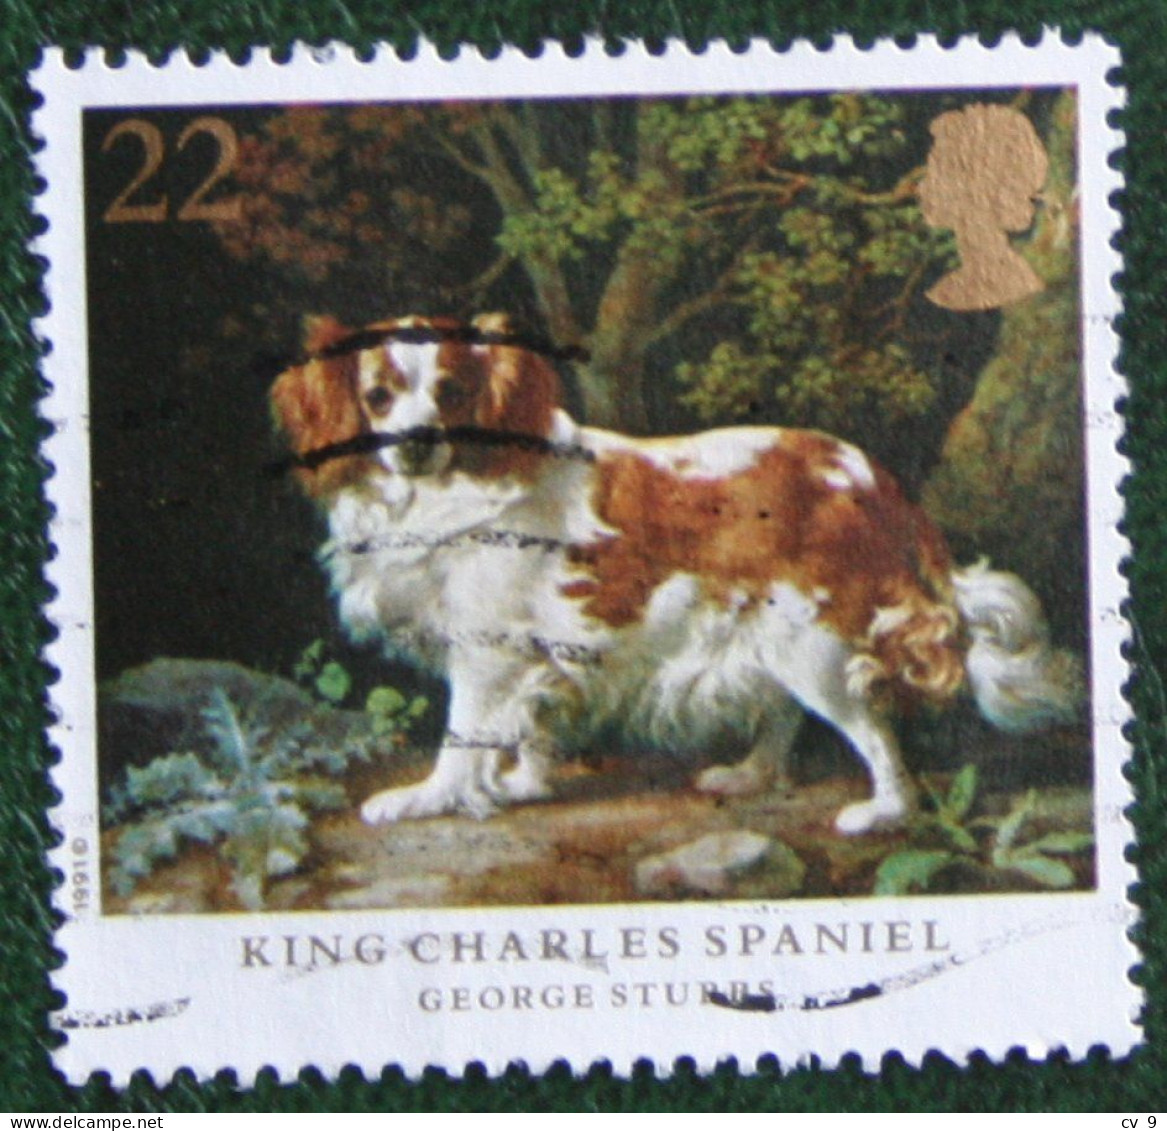 Dog Chien Hund Hunde (Mi 1305) 1991 Used Gebruikt Oblitere ENGLAND GRANDE-BRETAGNE GB GREAT BRITAIN - Used Stamps